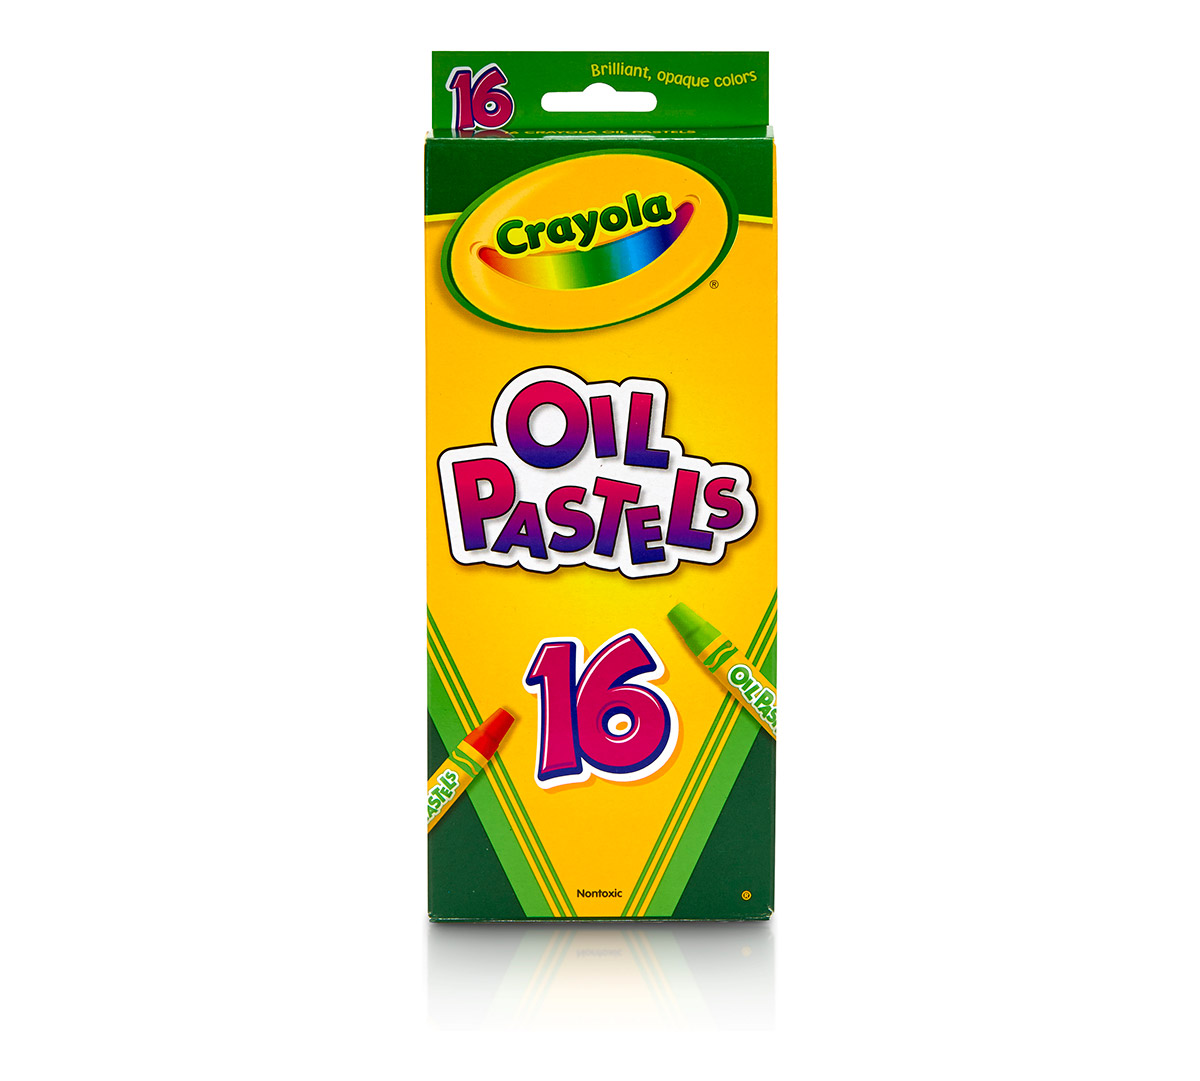 CRAYOLA OIL PASTELS vs Crayons ▻ Review 